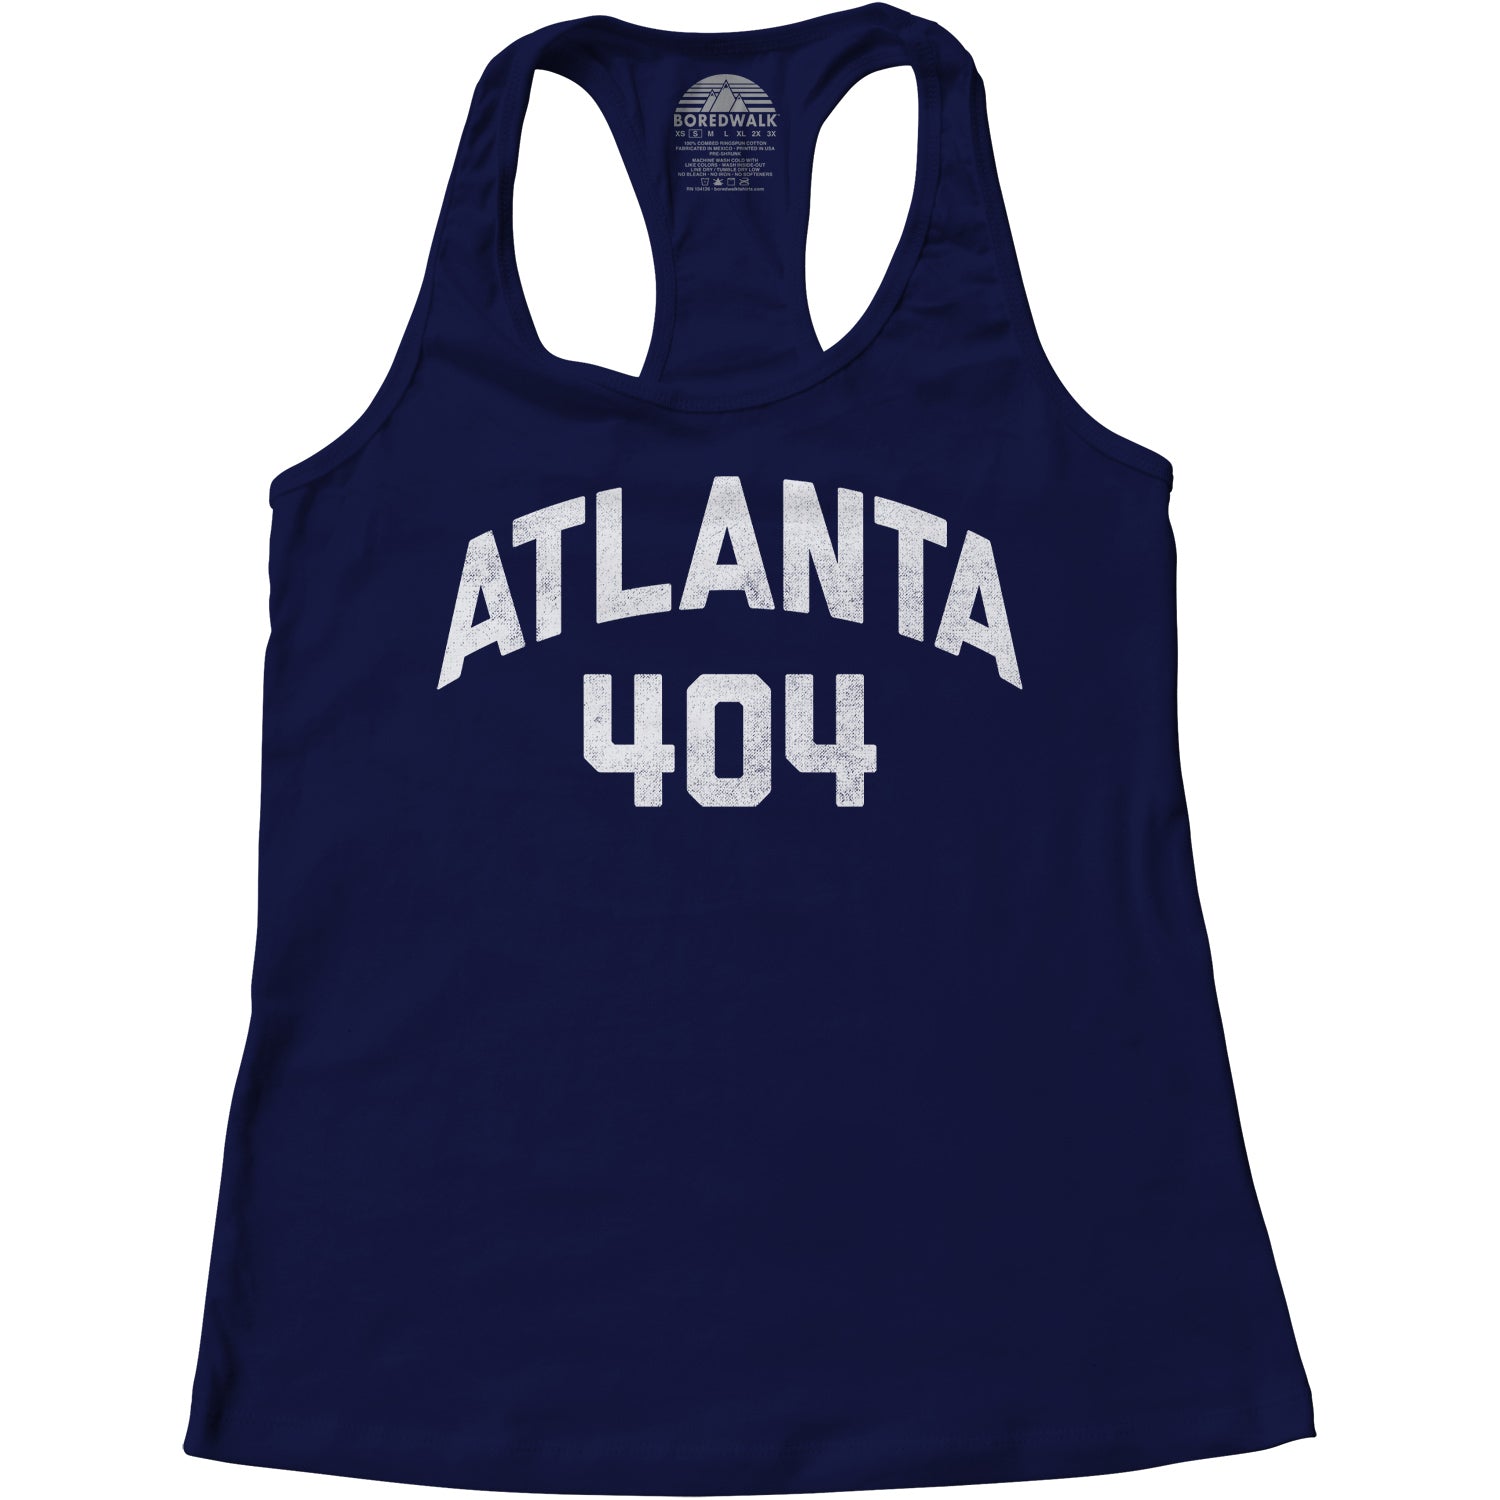 BoredWalk Men's Atlanta 404 Area Code T-Shirt, Medium / Navy